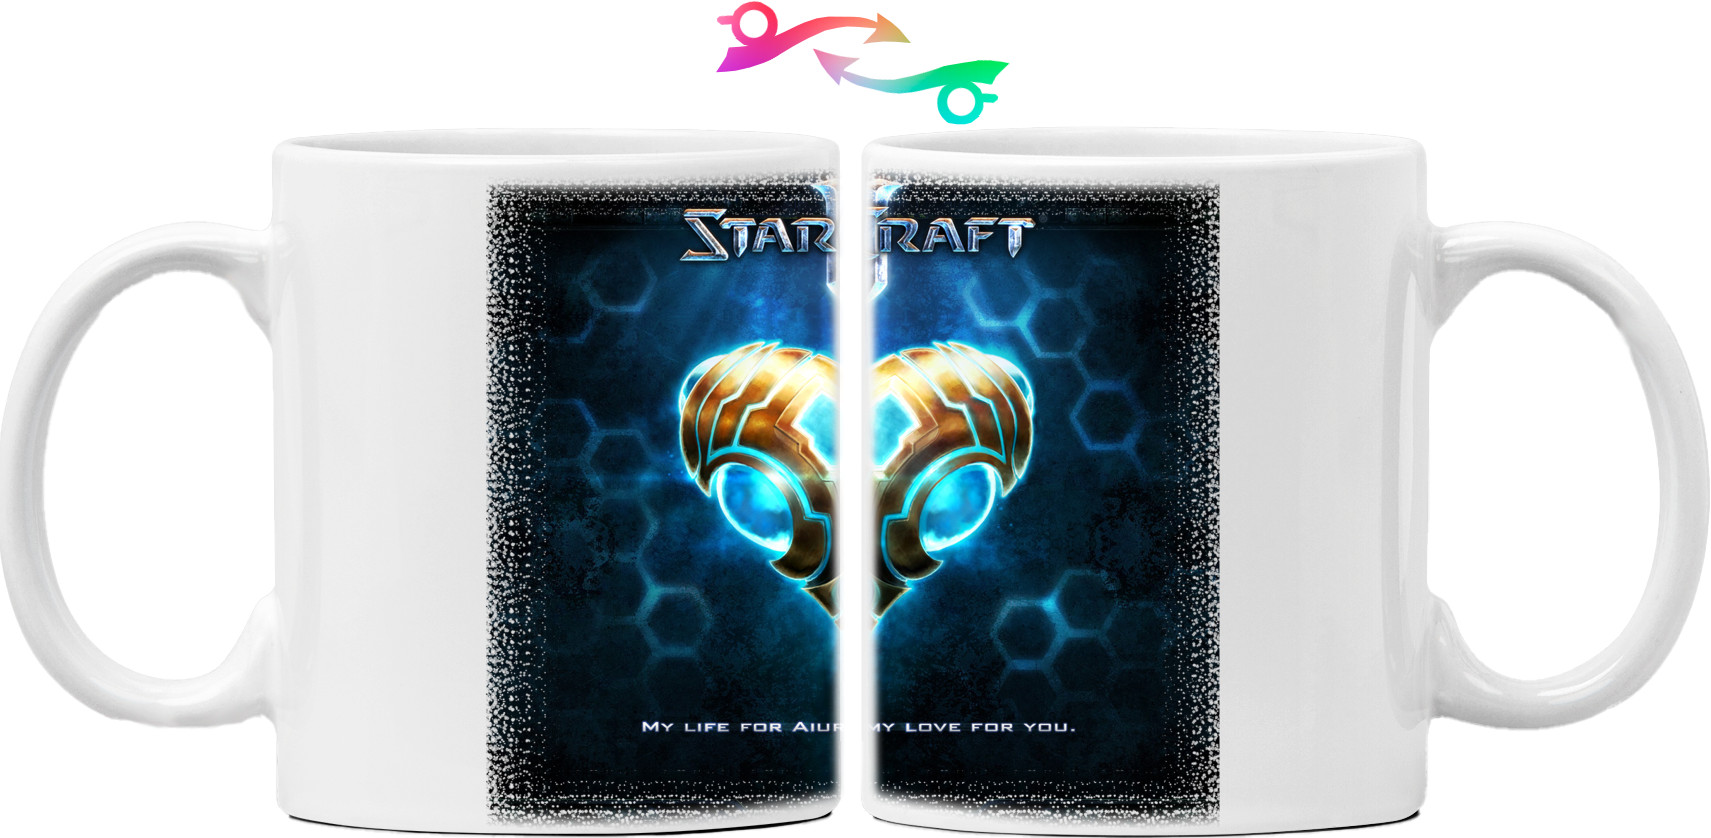 Starcraft 2 (2)